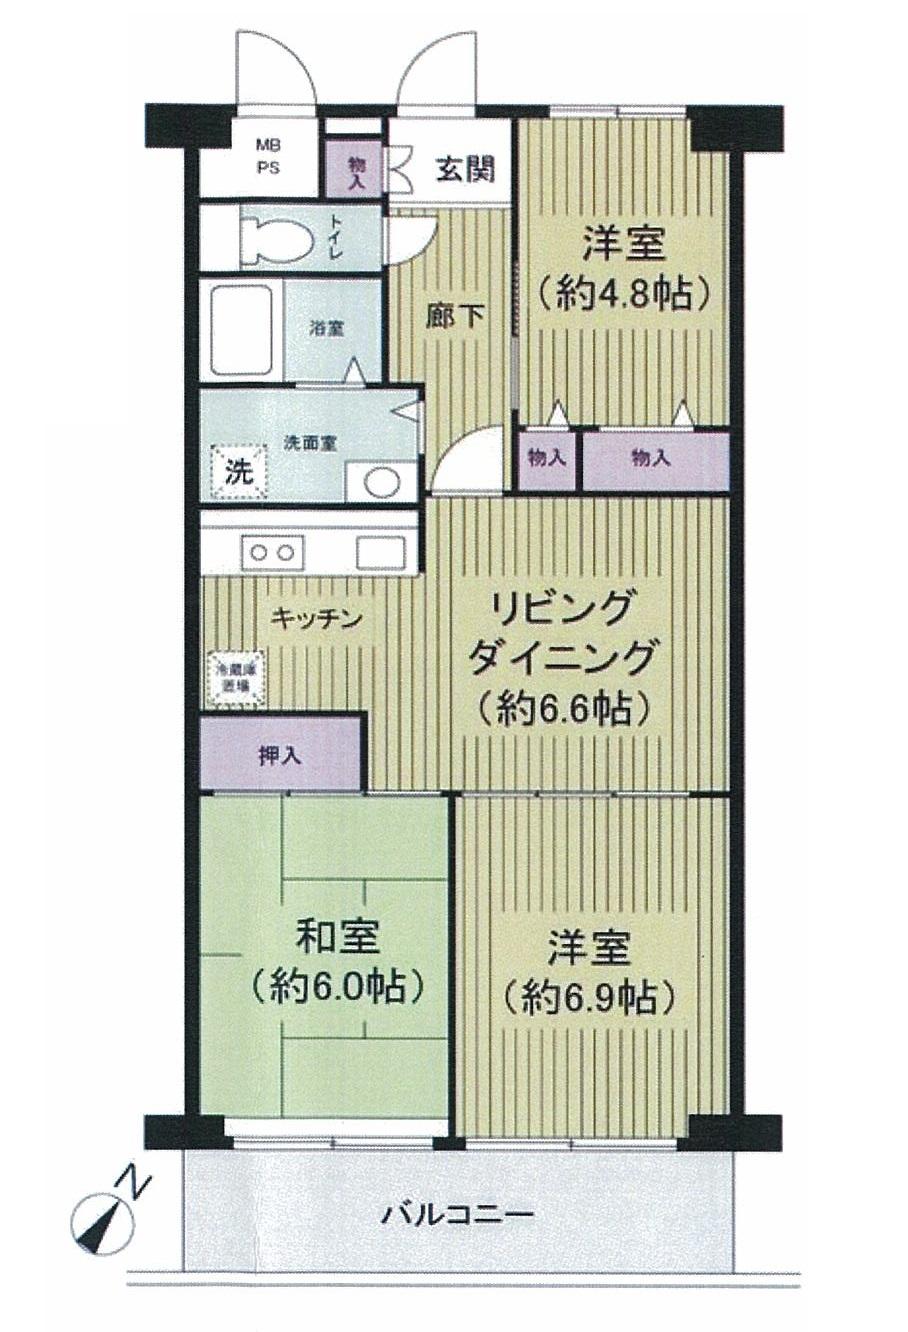 Floor plan. 3LDK, Price 20.8 million yen, Footprint 64.4 sq m , Balcony area 7.84 sq m floor plan